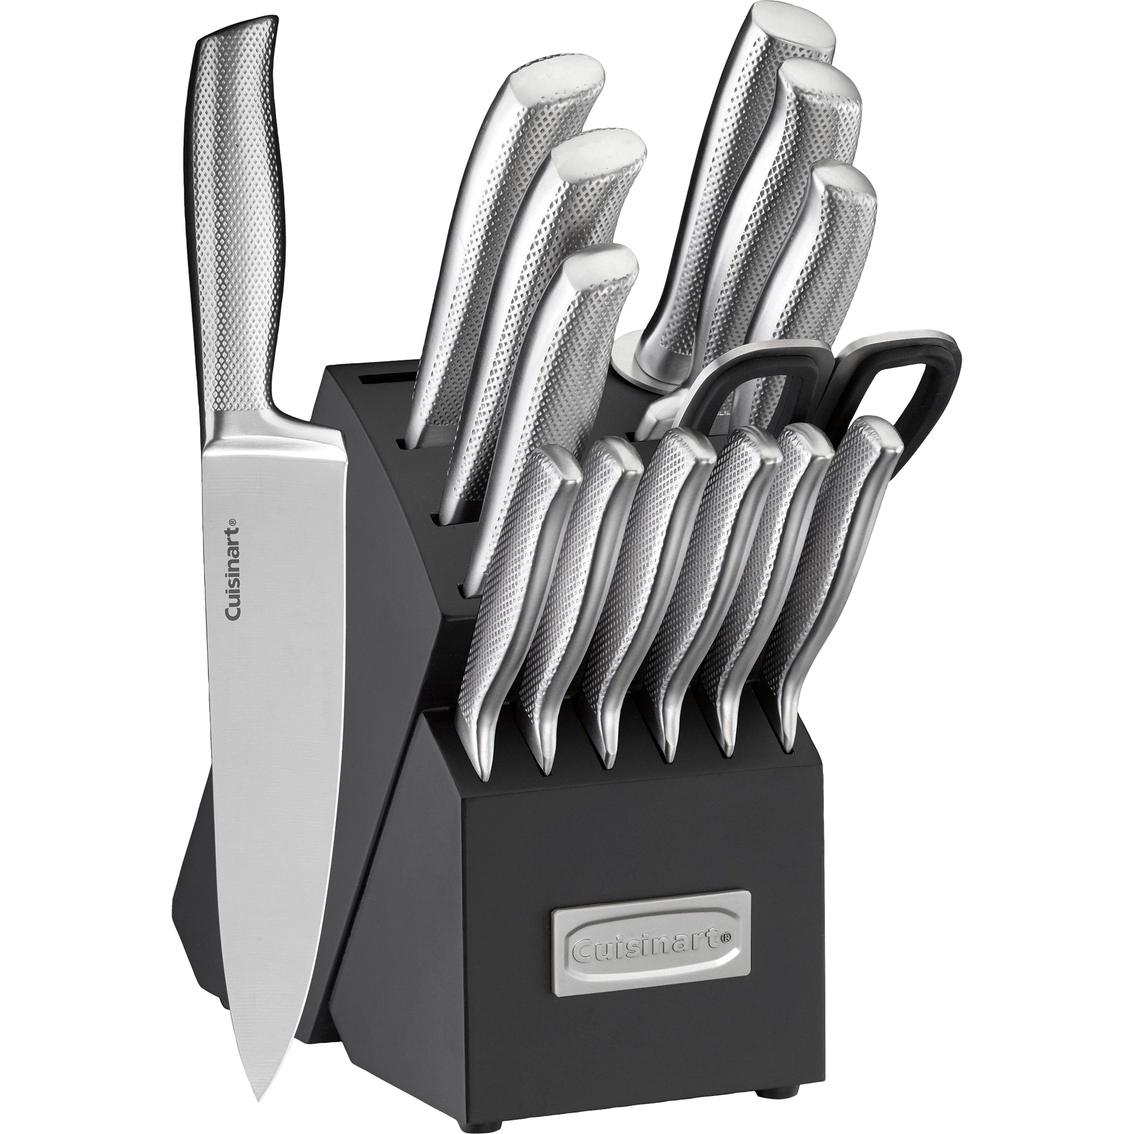 Cuisinart Professional Series 6-Piece Chef Knife Set